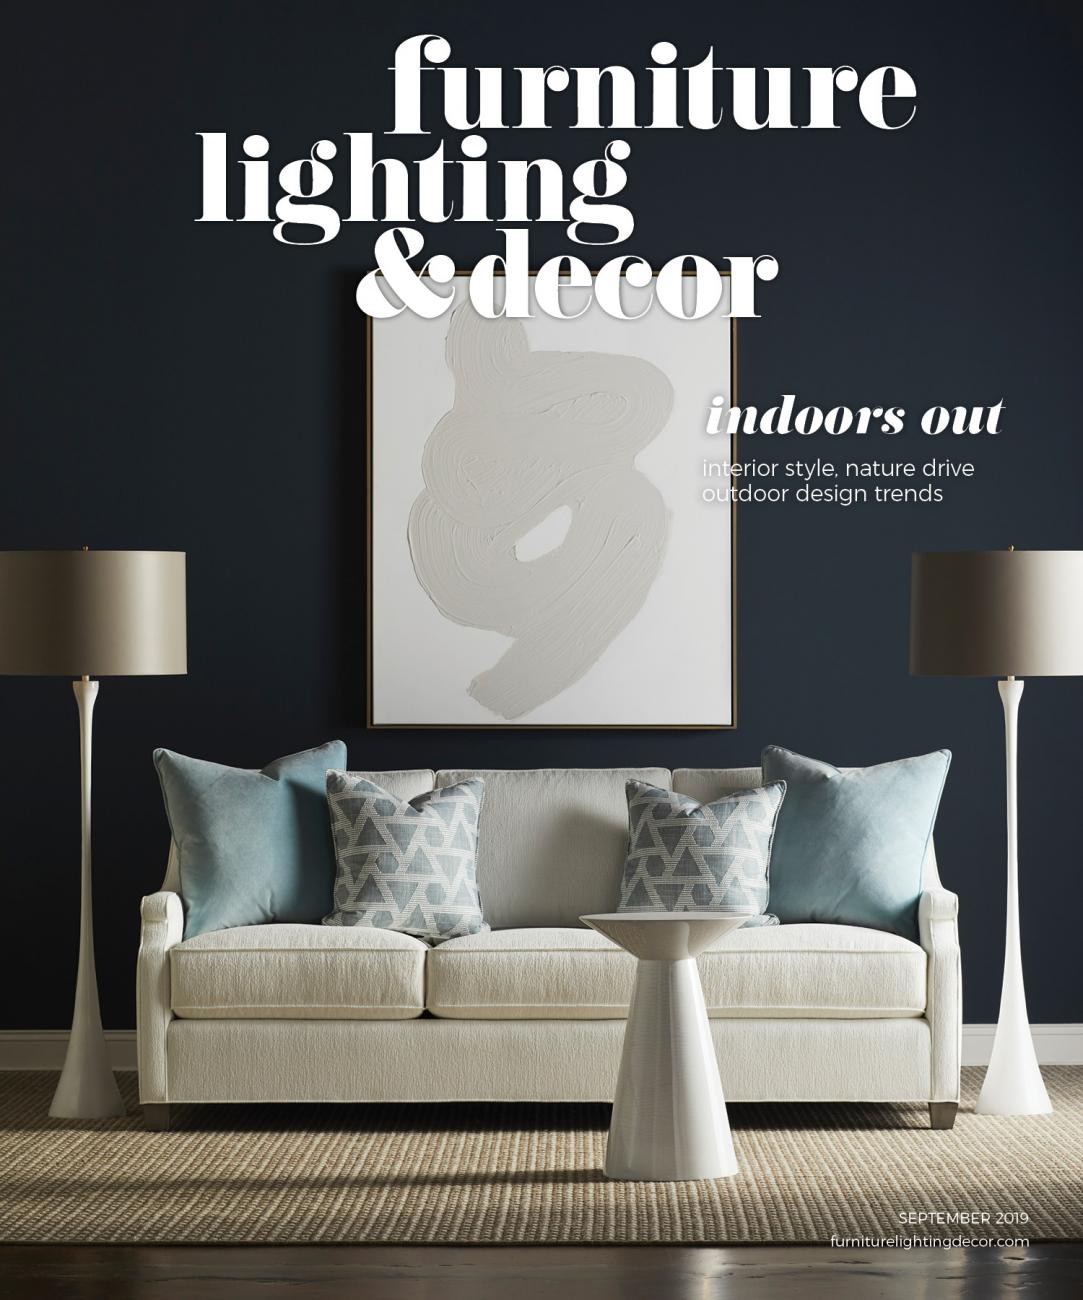 Furniture, Lighting & Decor September 2019 outdoor living